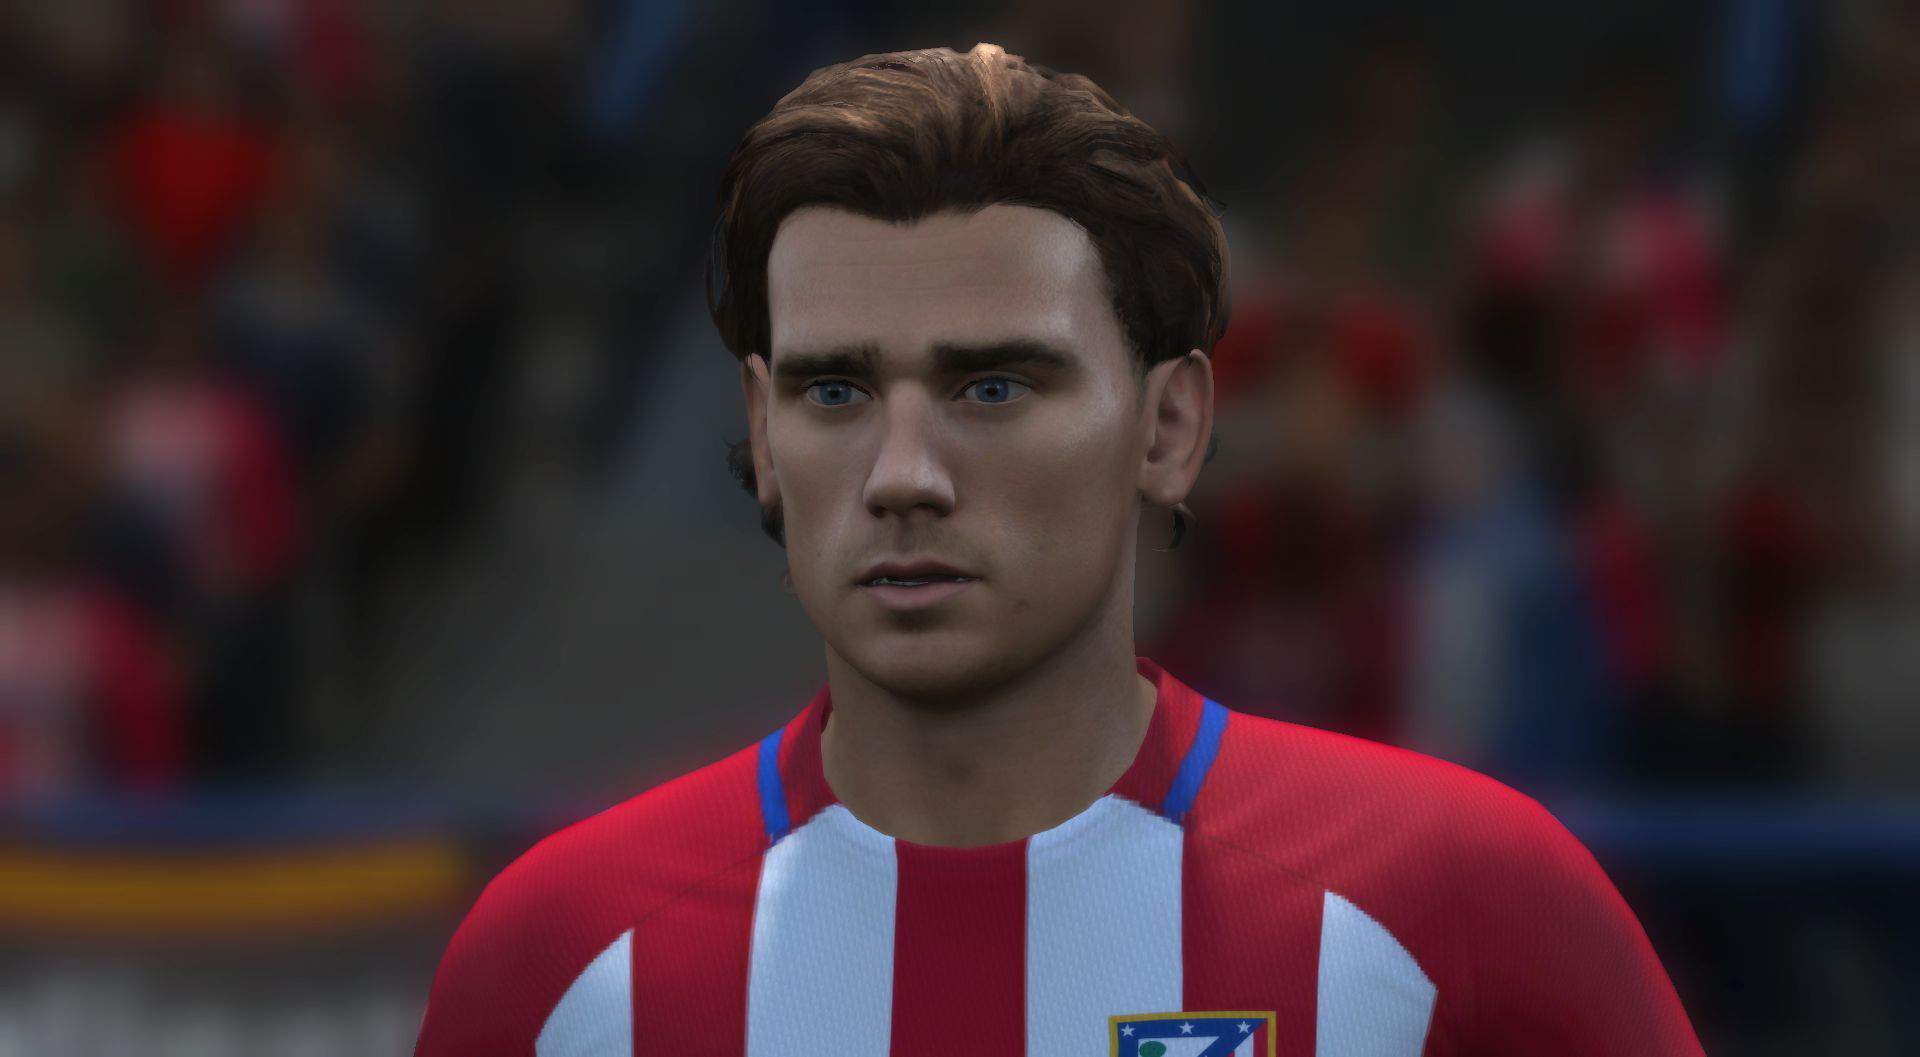 Fifa moddingway. FIFA 22 Barca face Mods. Odding.